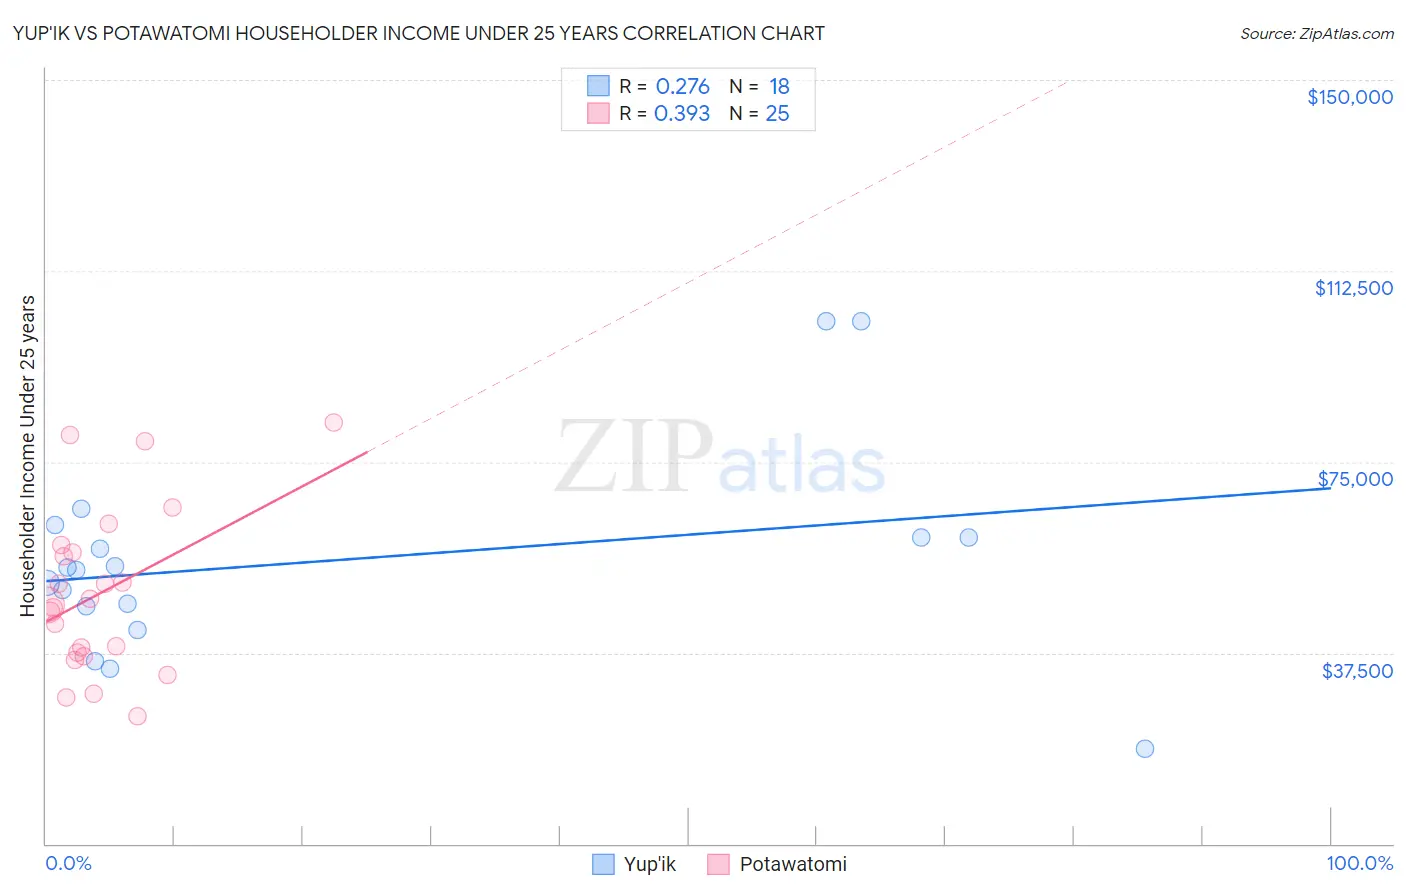 Yup'ik vs Potawatomi Householder Income Under 25 years